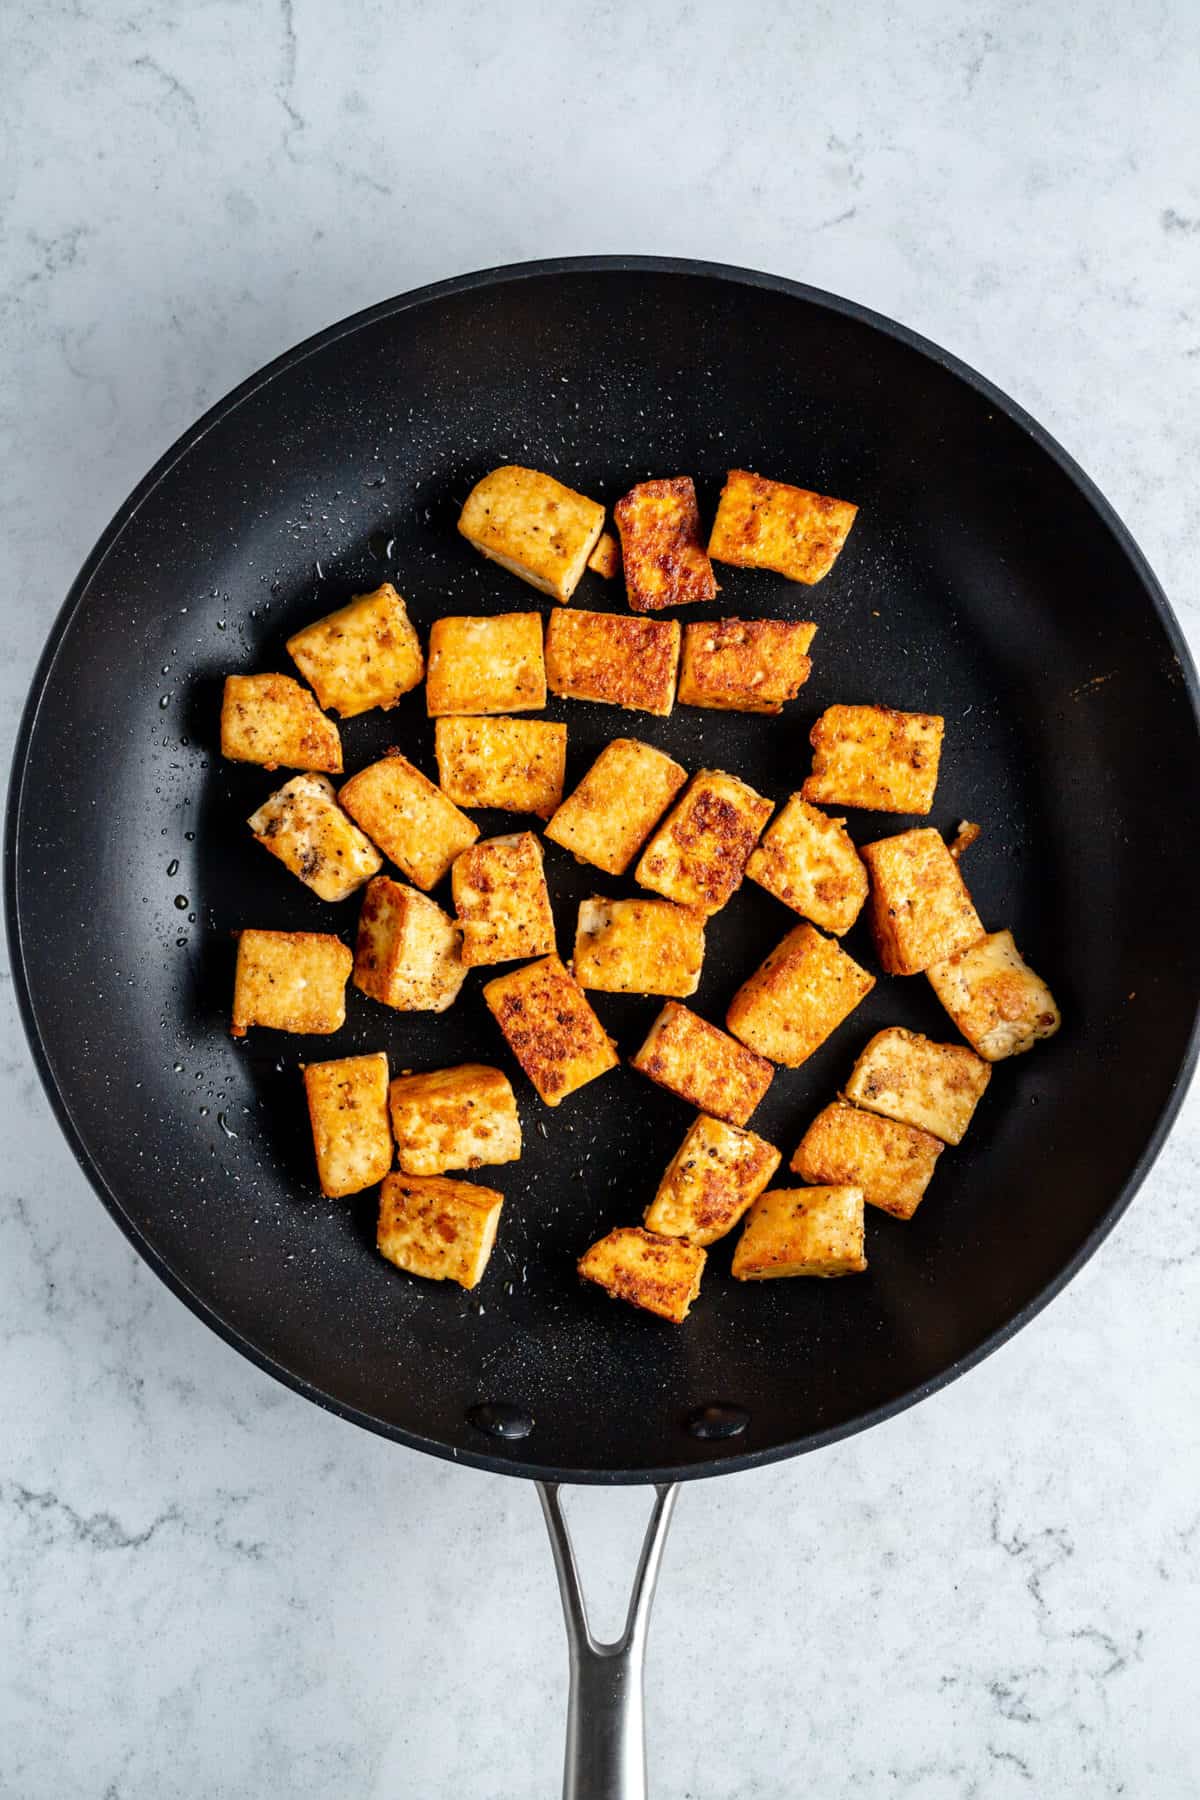 Crispy tofu in a frying pan.